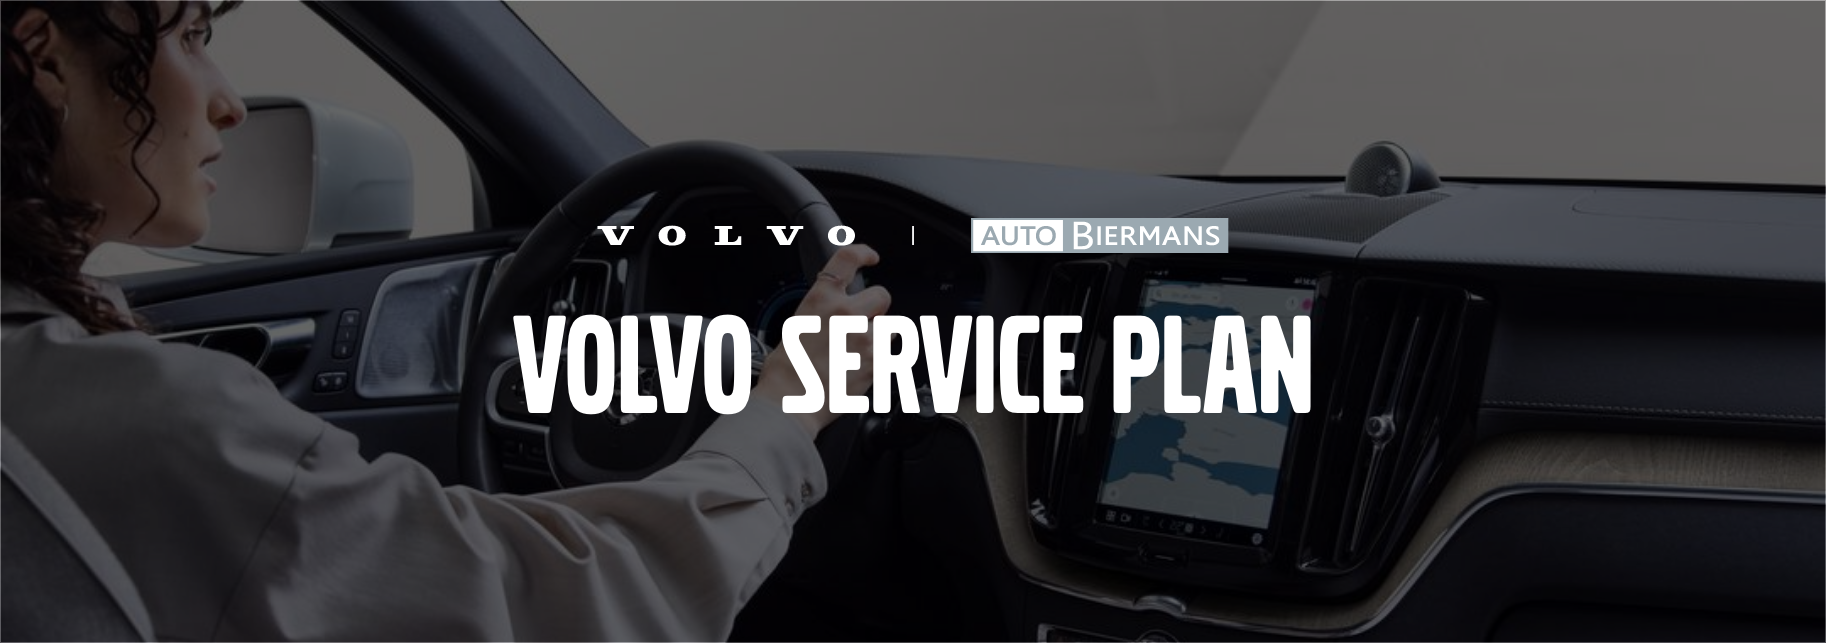 Volvo Service Plan